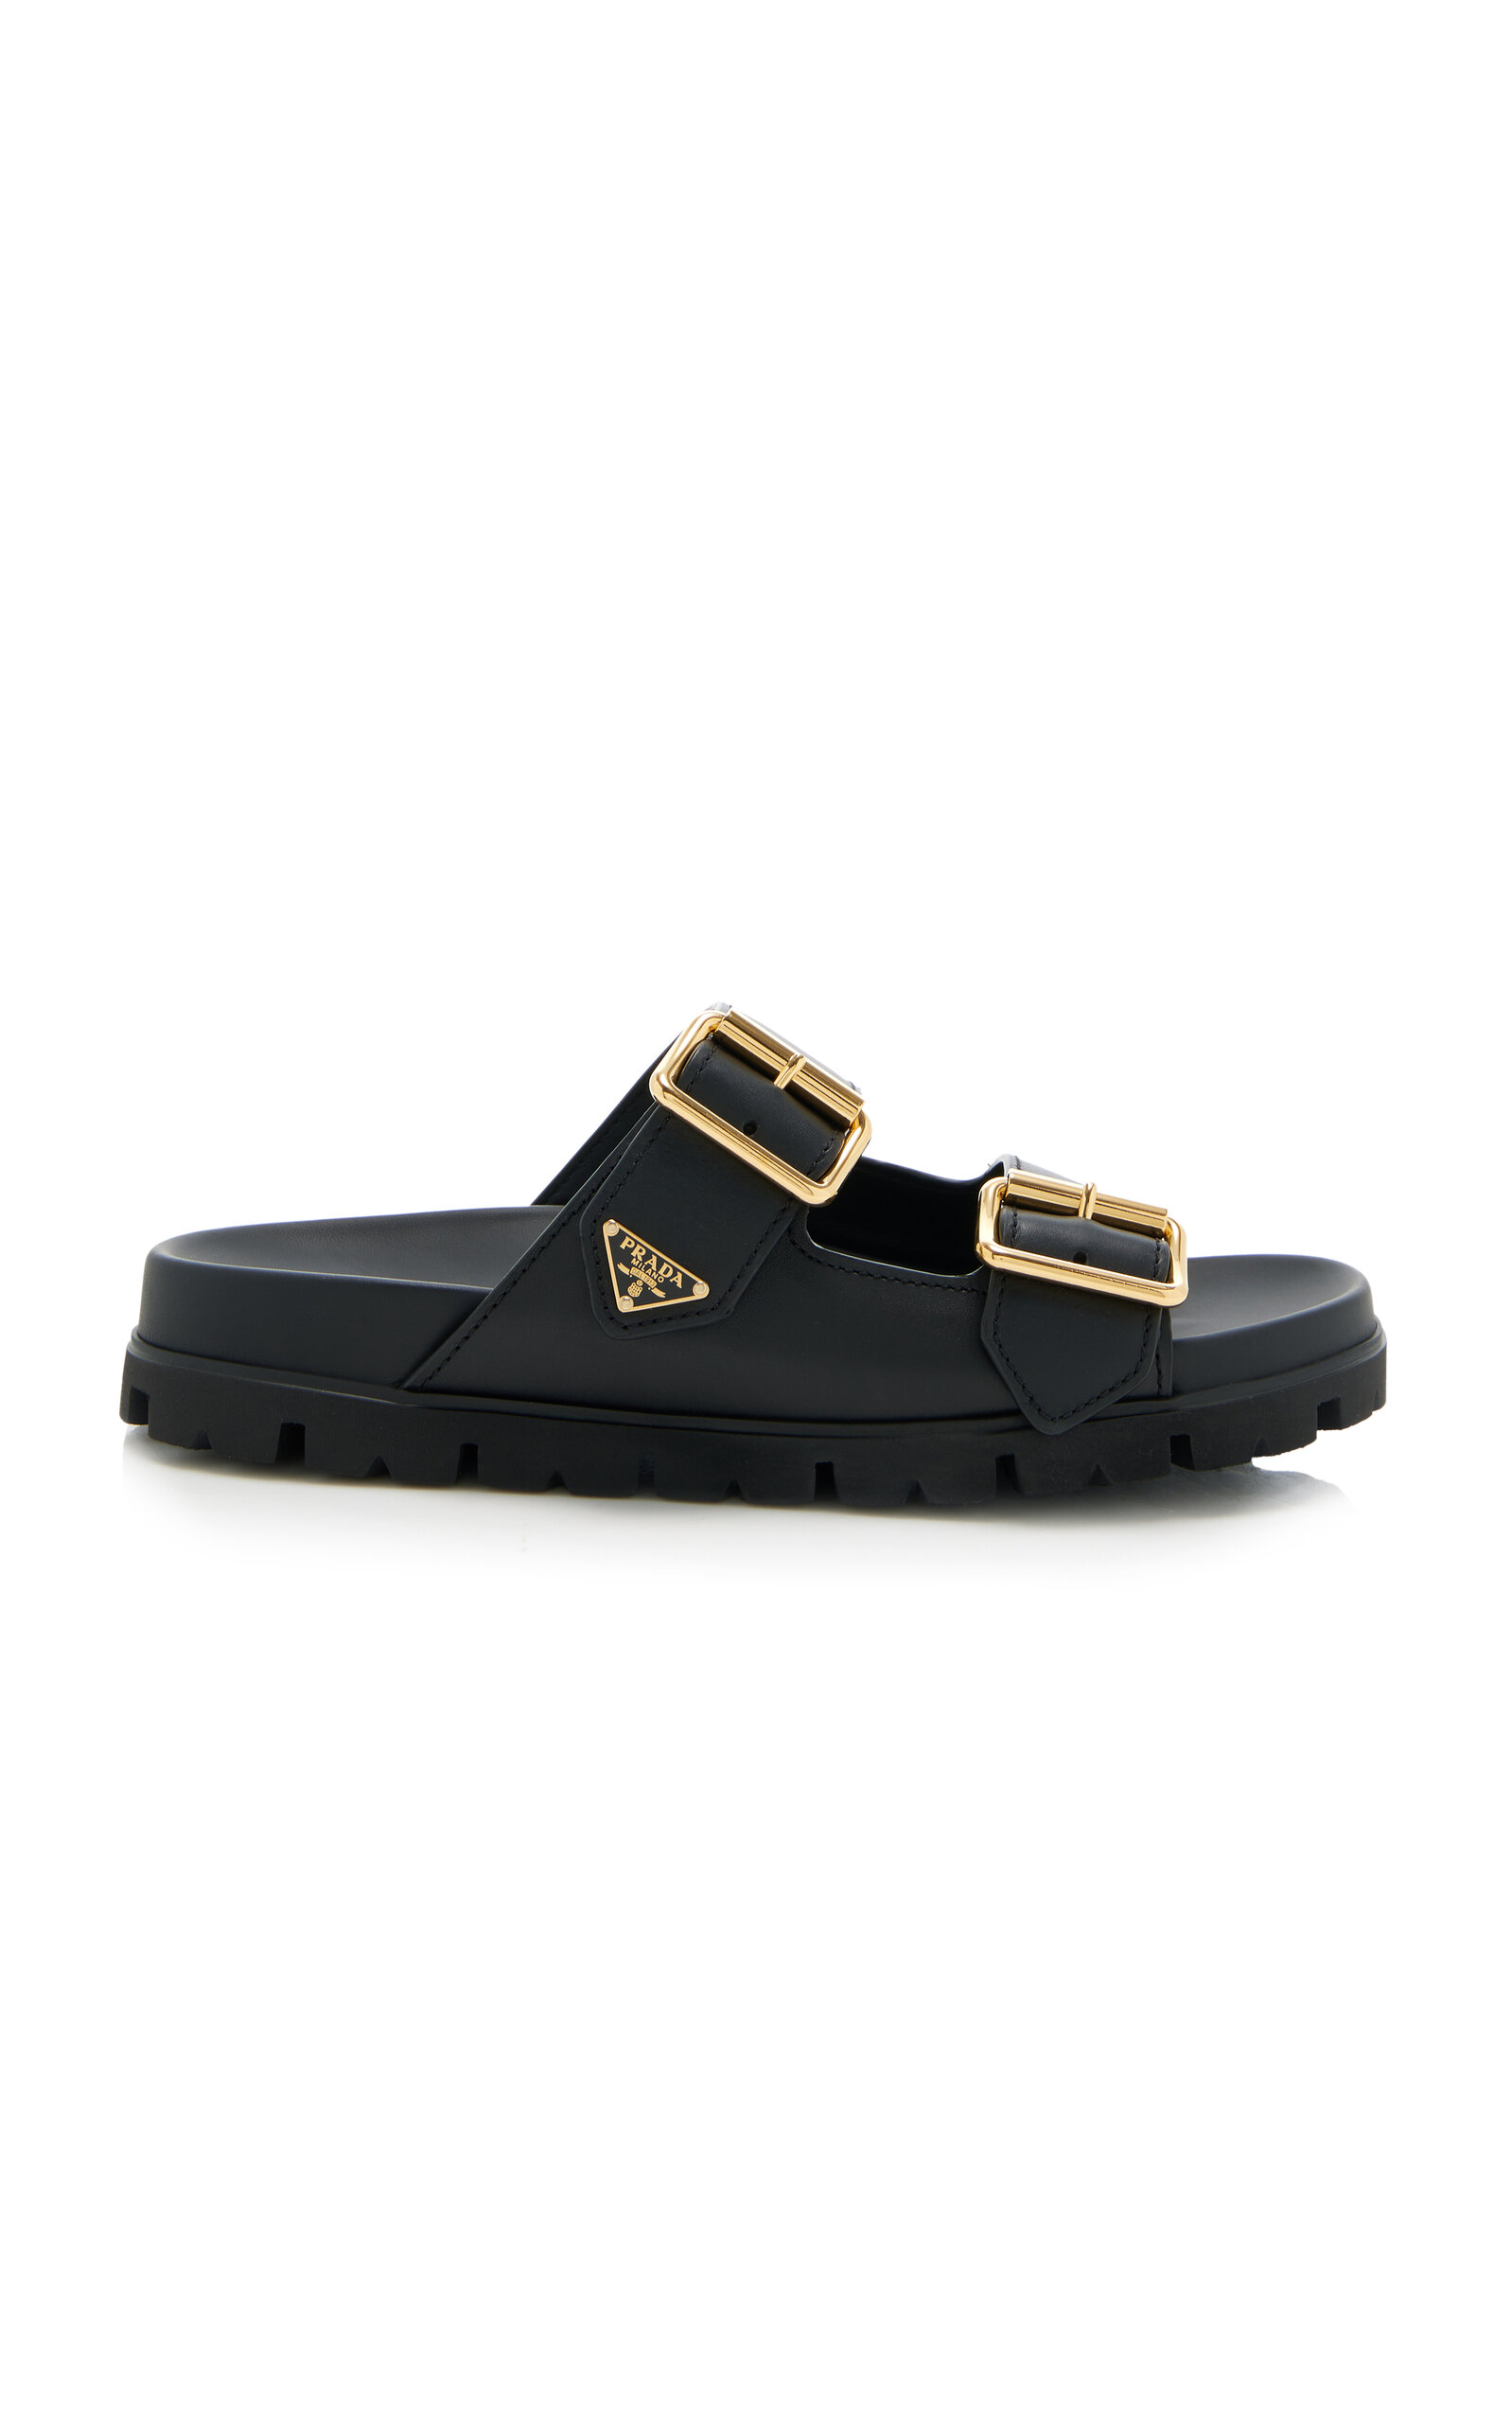 Prada - Buckle-Detailed Leather Slip-On Sandals            - Black - IT 41 - Moda Operandi